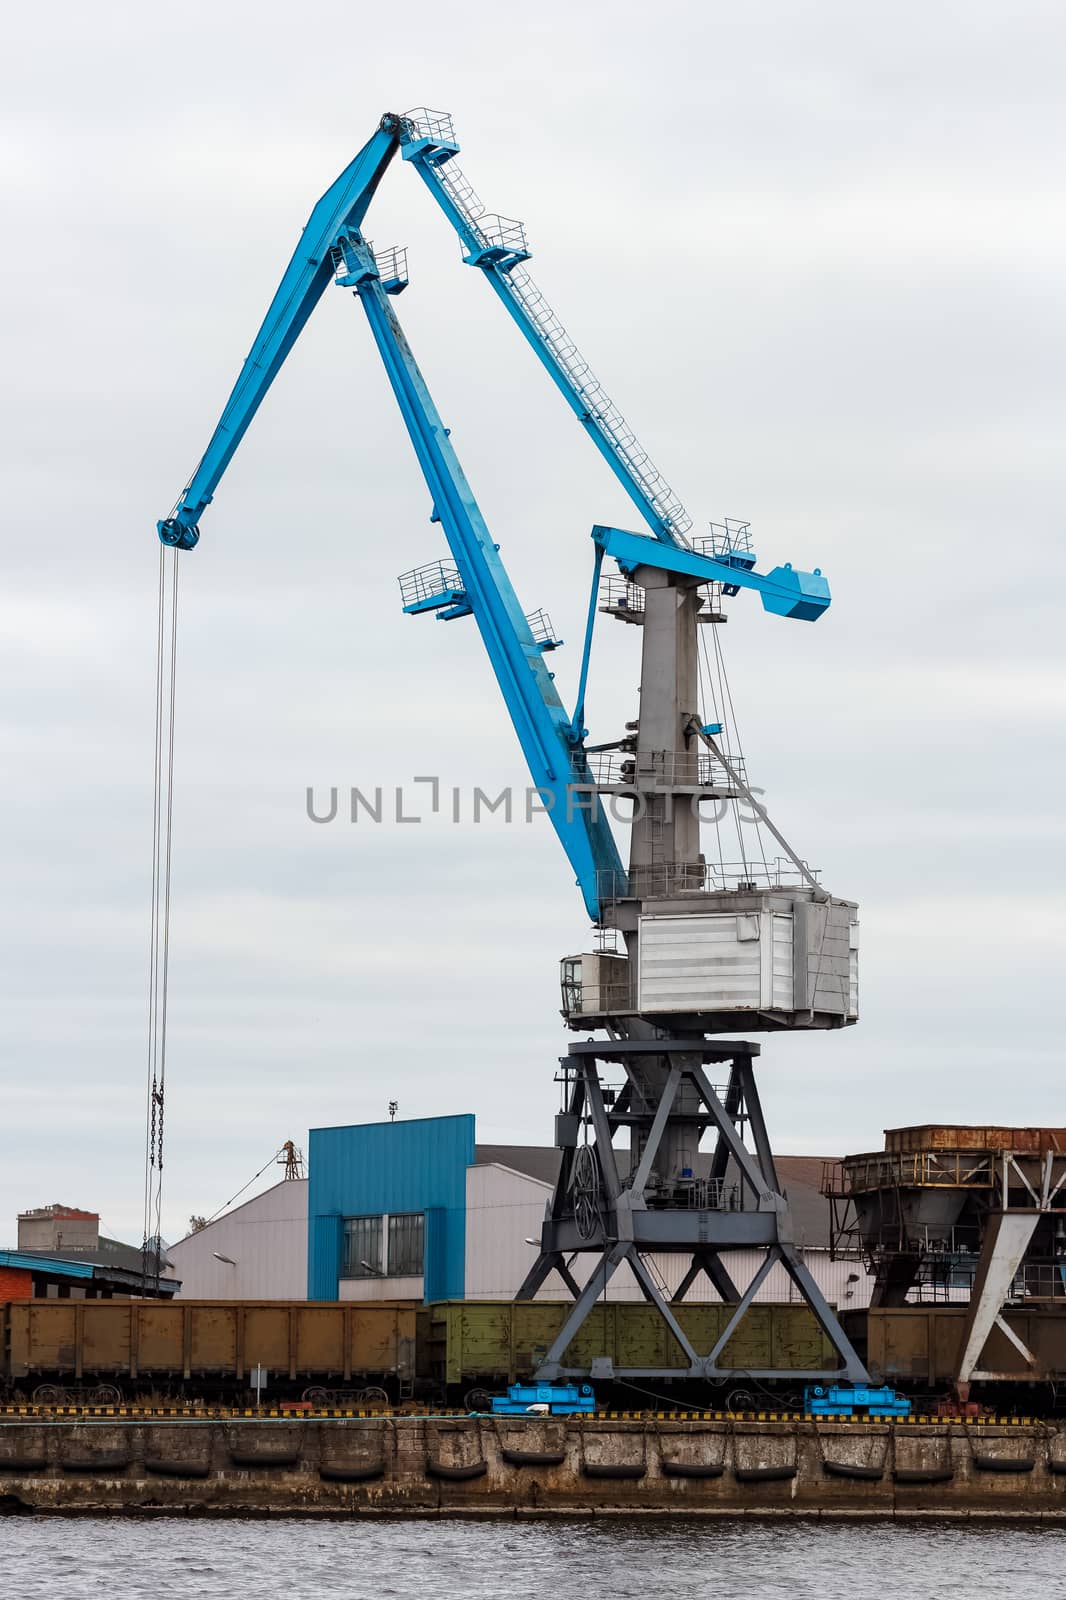 Cargo crane in the port by sengnsp